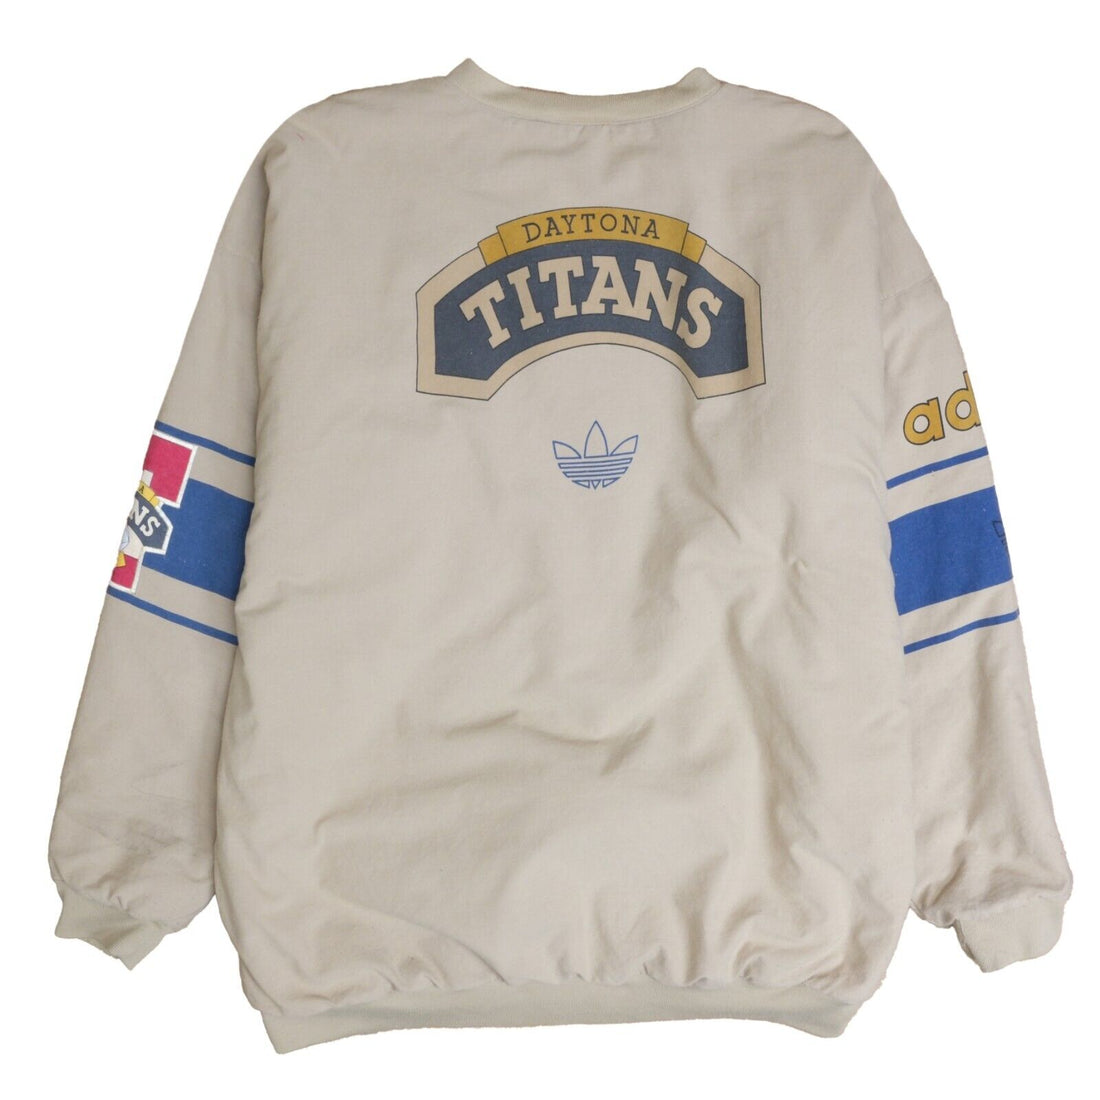 Vintage Adidas Daytona Titans Football Champions Sweatshirt Crewneck Size XL